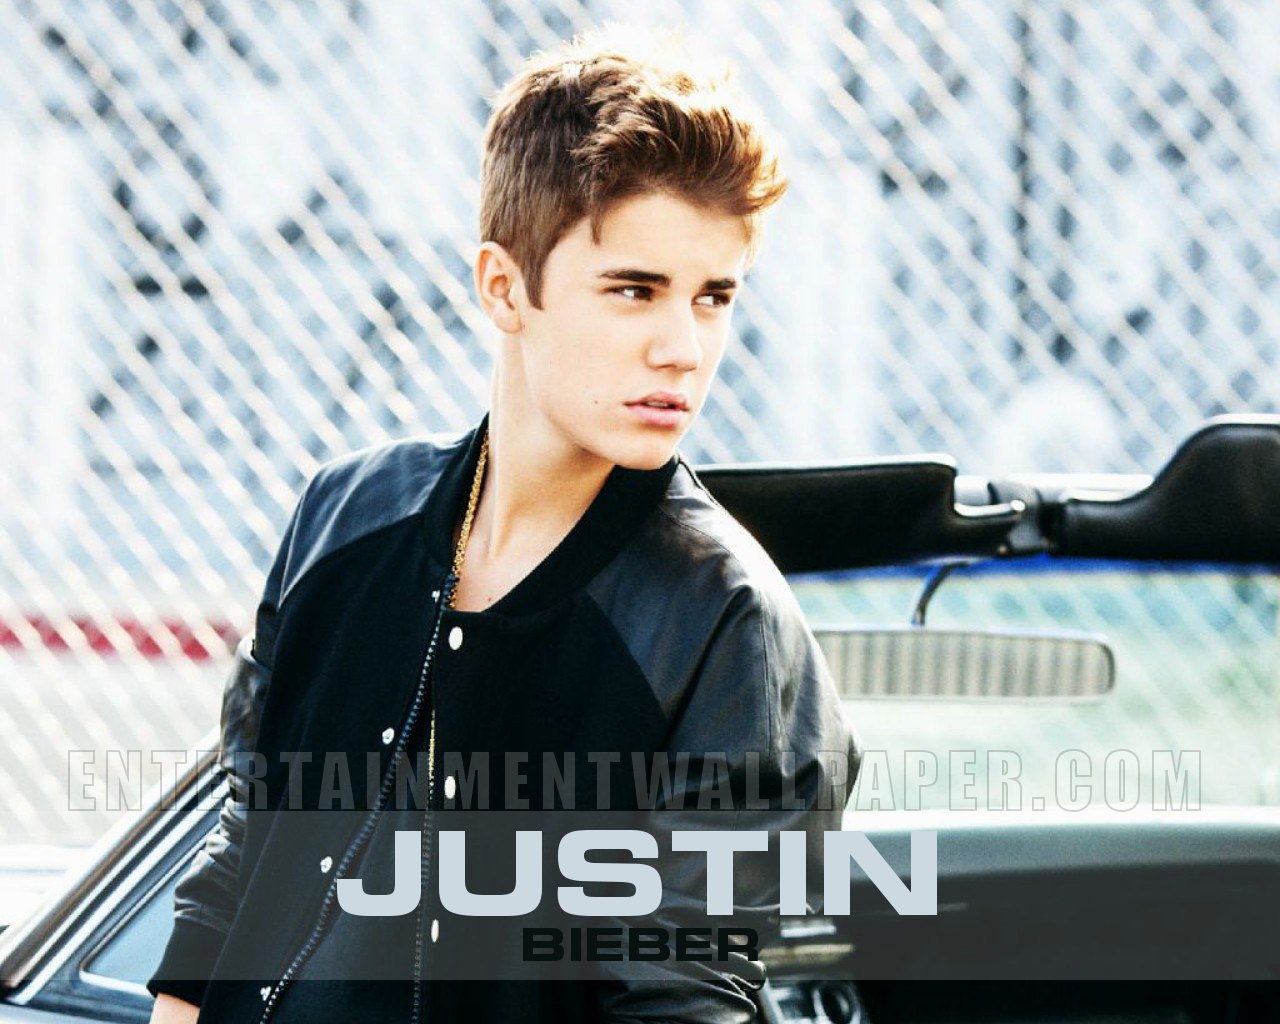 Justin Bieber - Justin Bieber As You Love Me - 1280x1024 Wallpaper -  